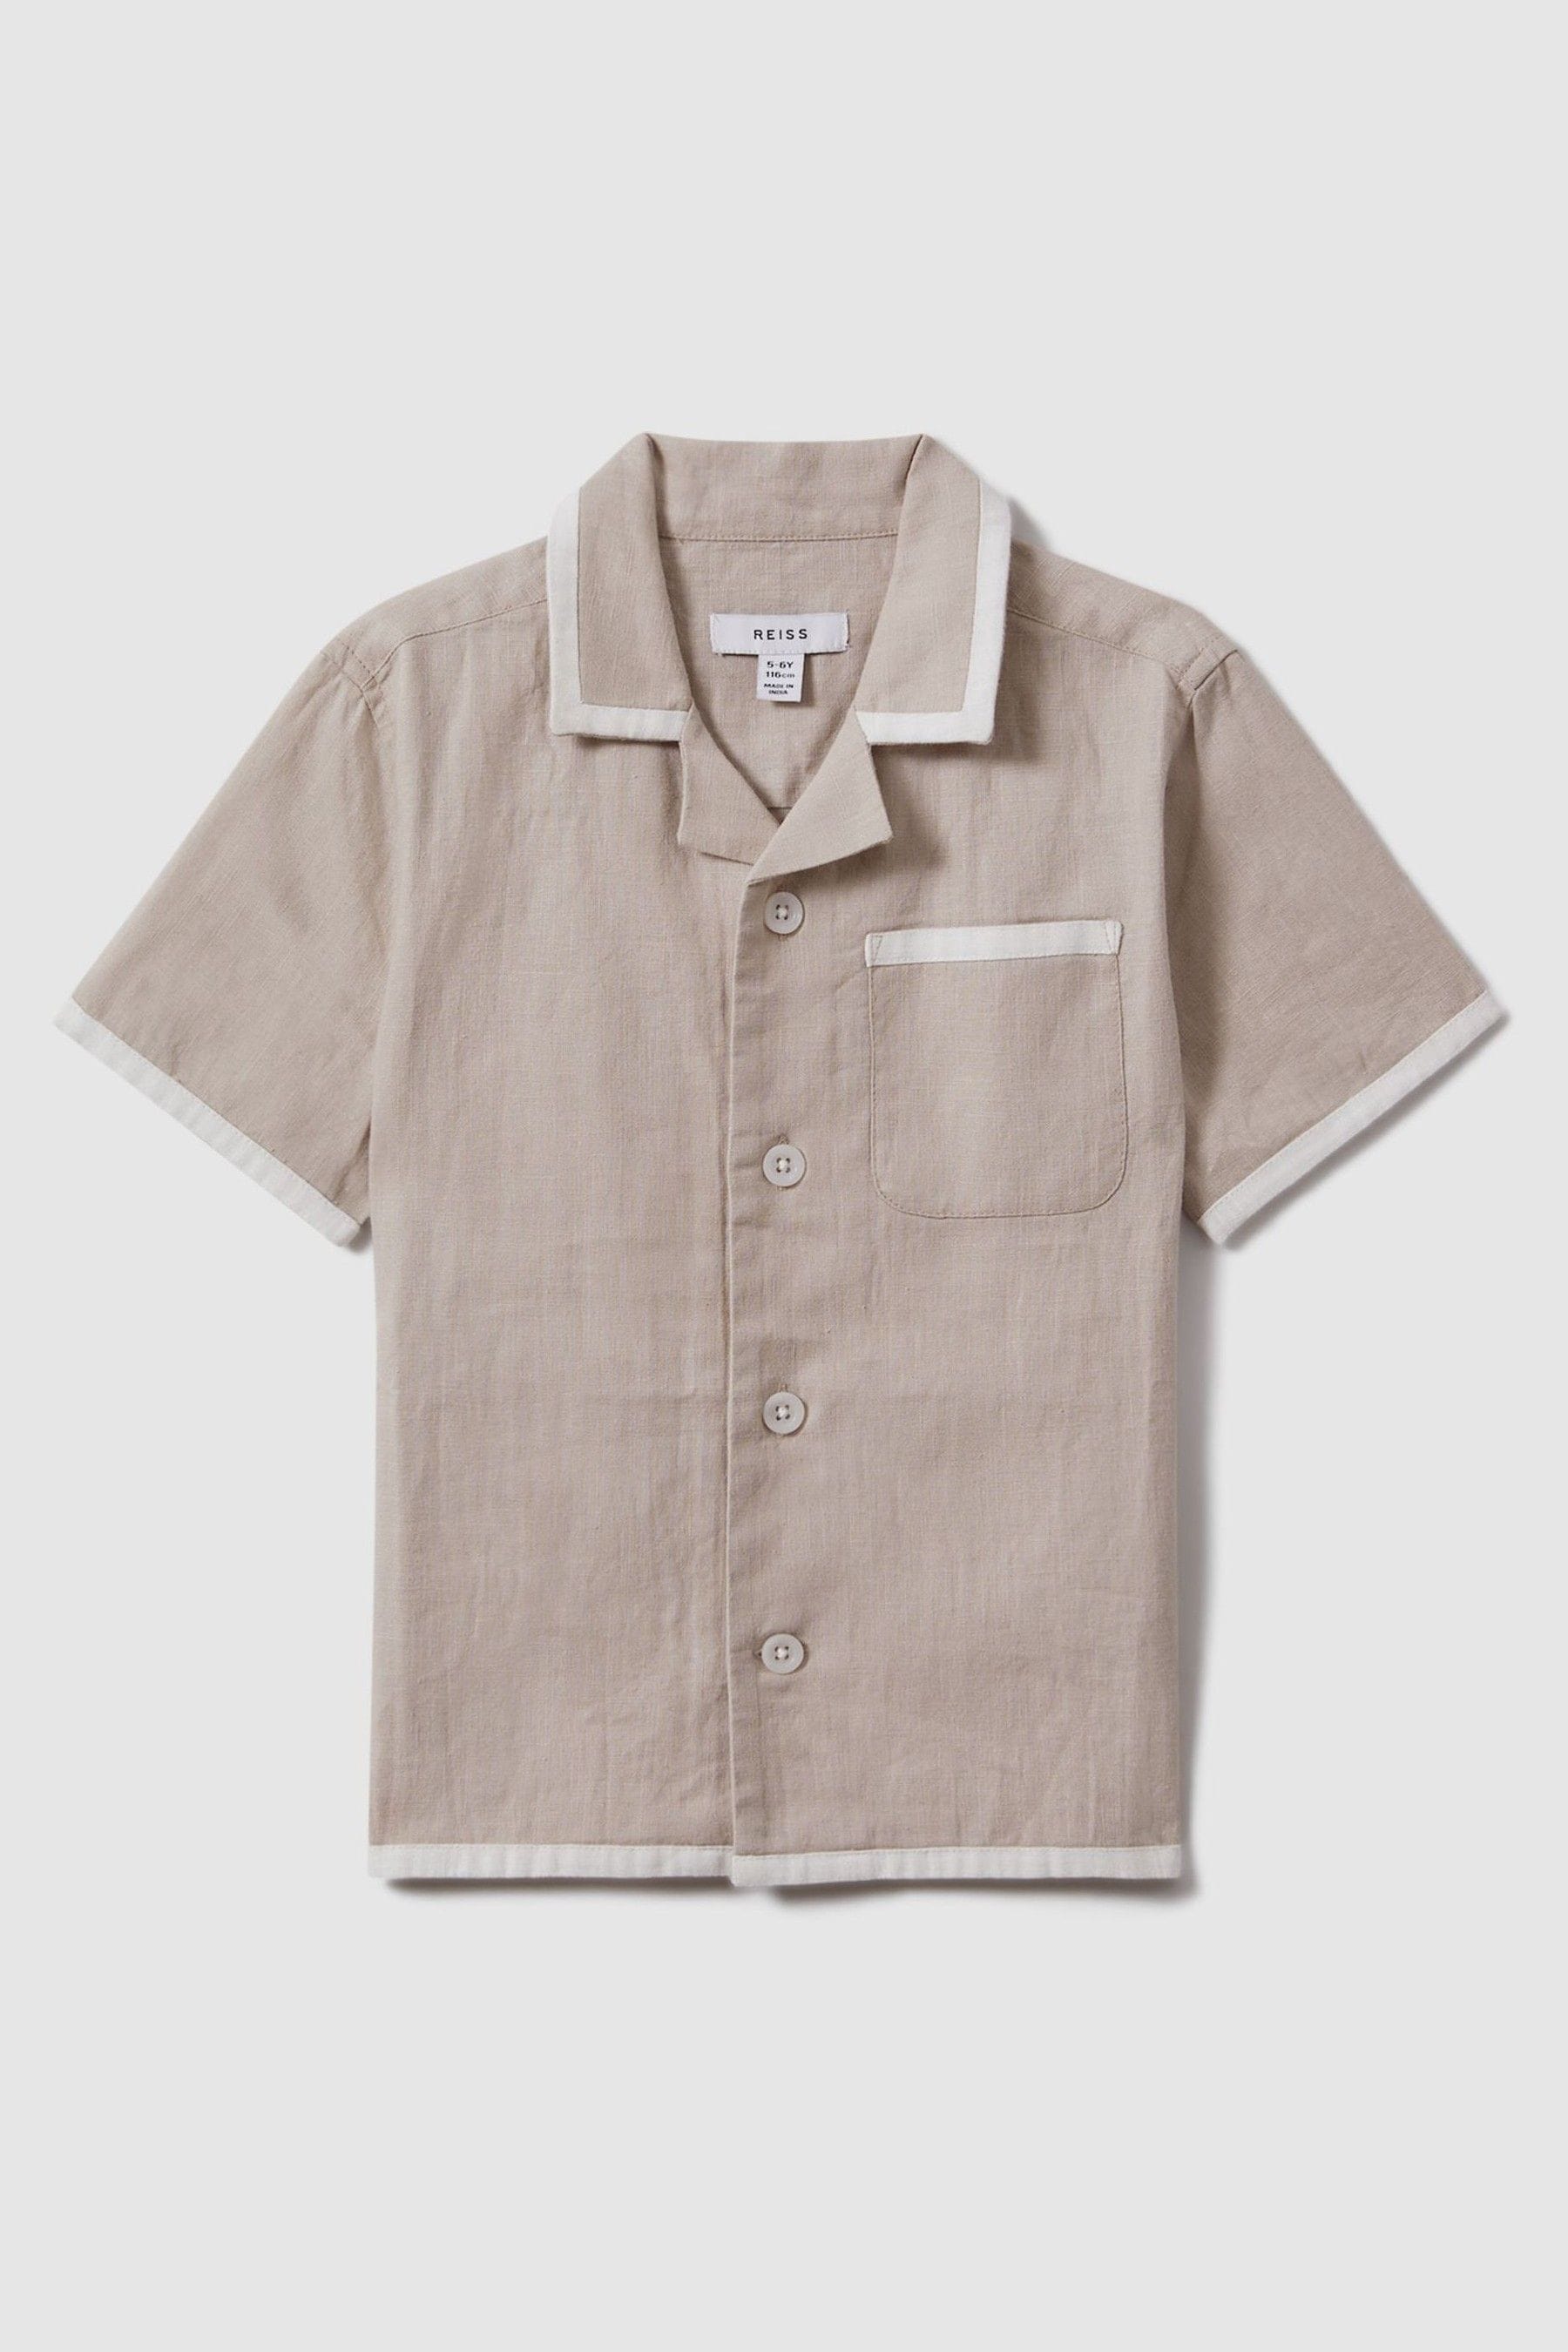 Shop Reiss Vitan - Stone/white Linen Contrast Cuban Collar Shirt, Uk 13-14 Yrs